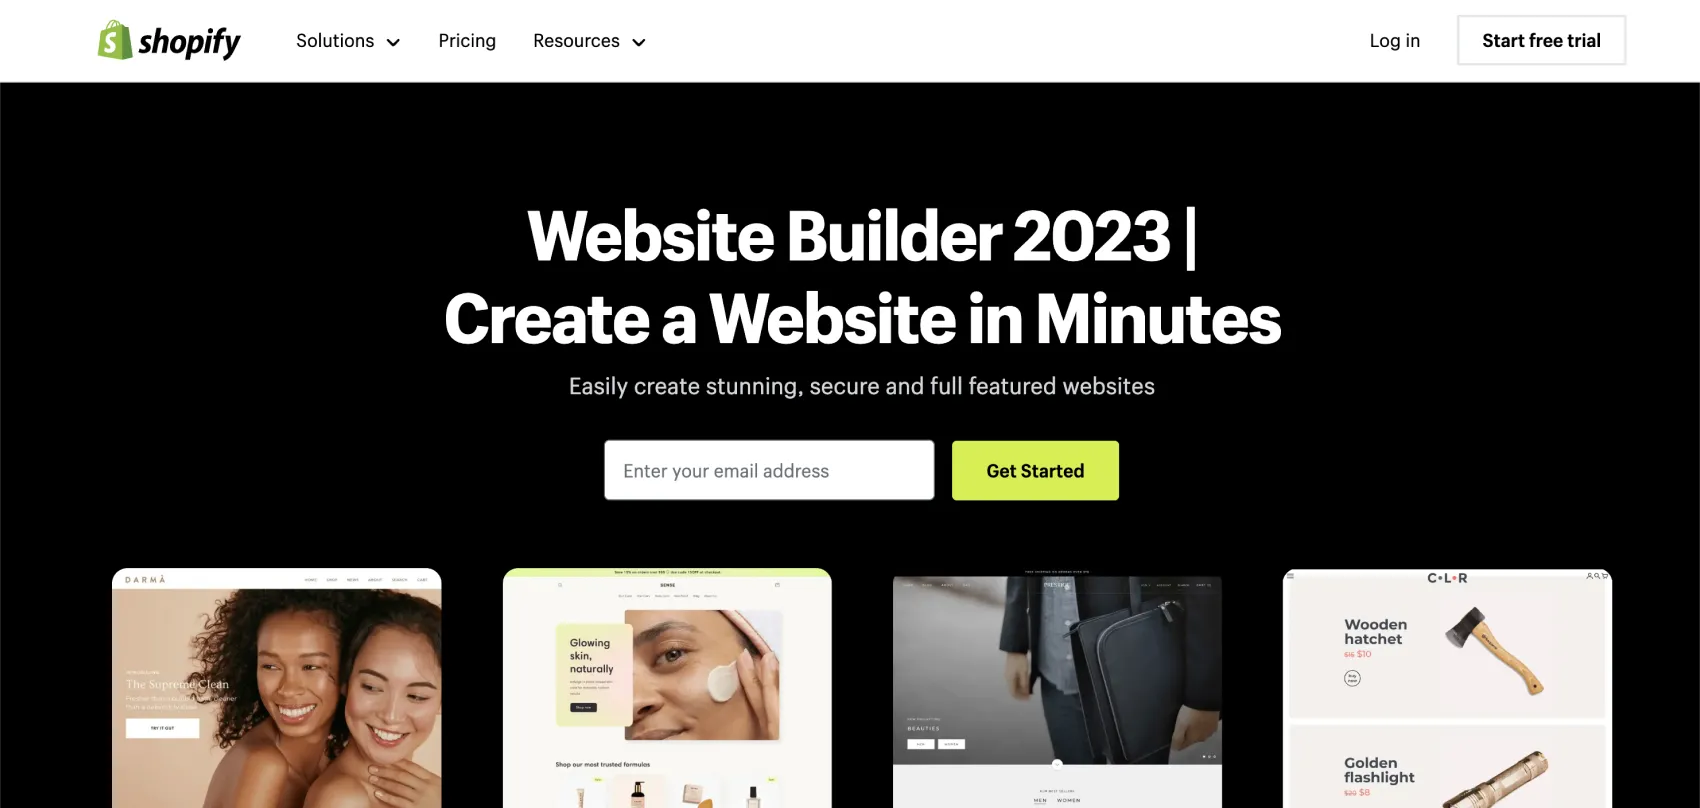 shopify-website-builder-home